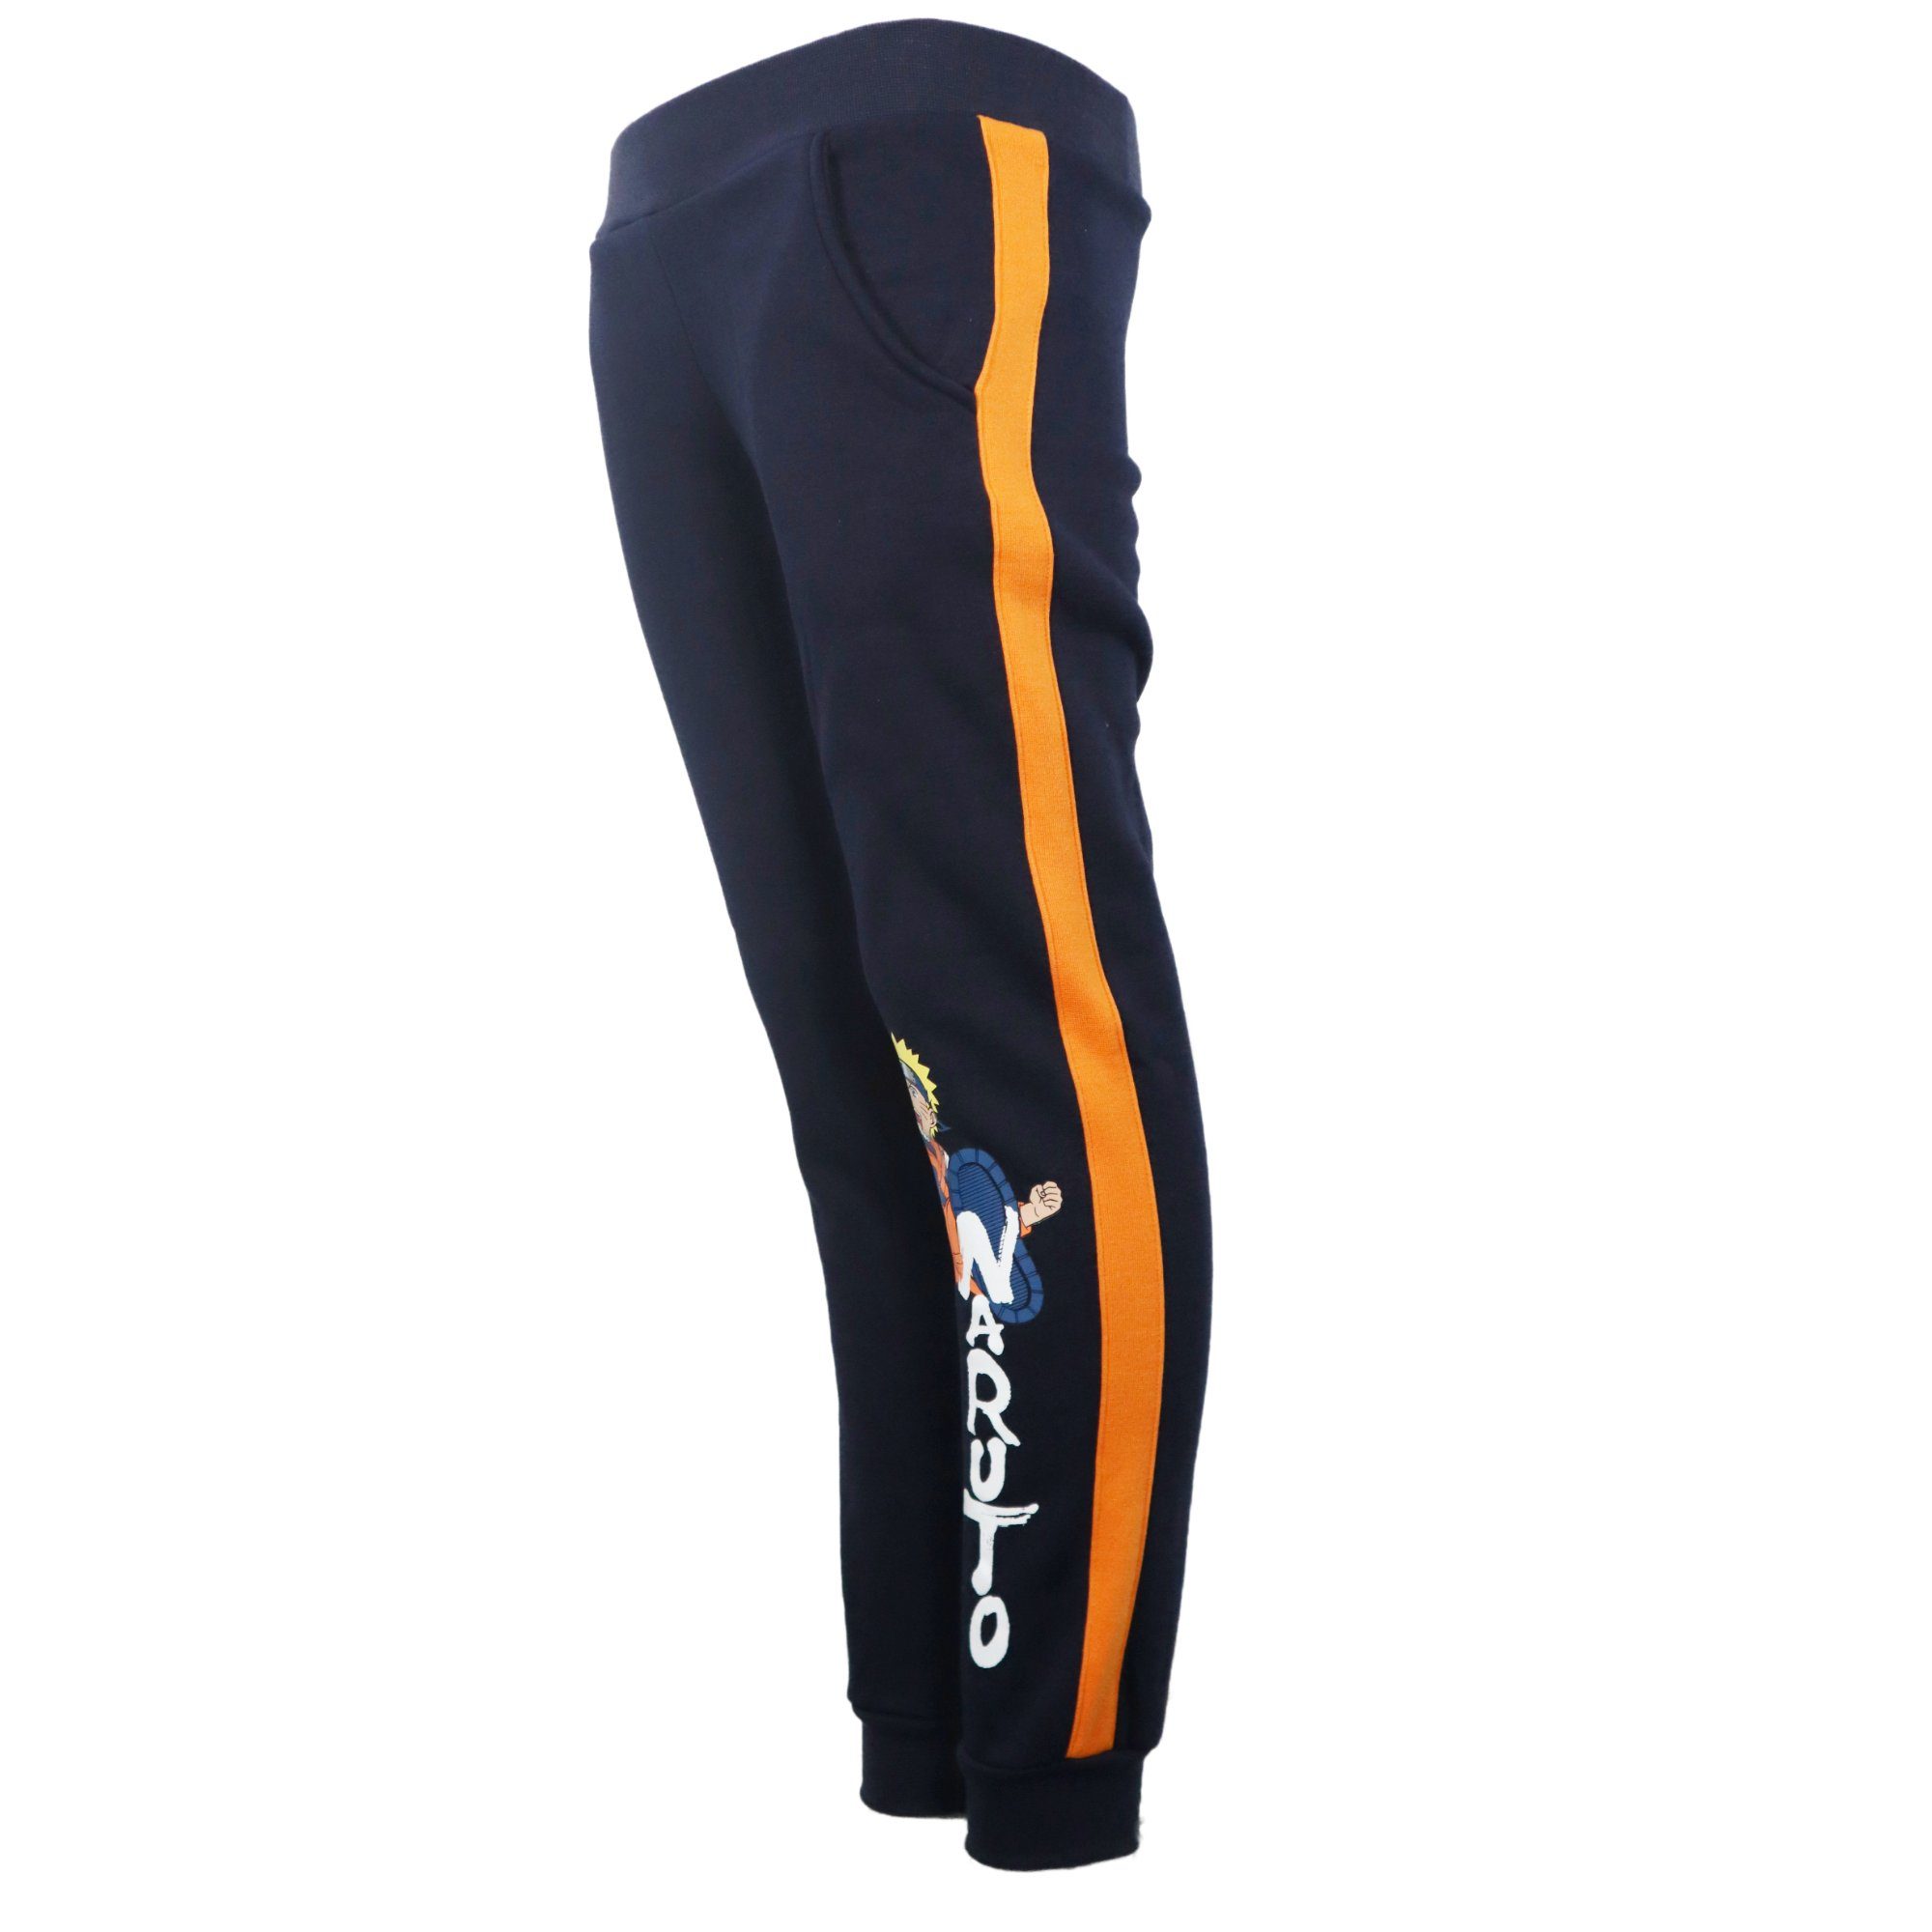 Naruto Jogginganzug Sporthose Sweater Naruto bis Blau Gr. Shippuden Jacke, 140 98 Hose Joggingset